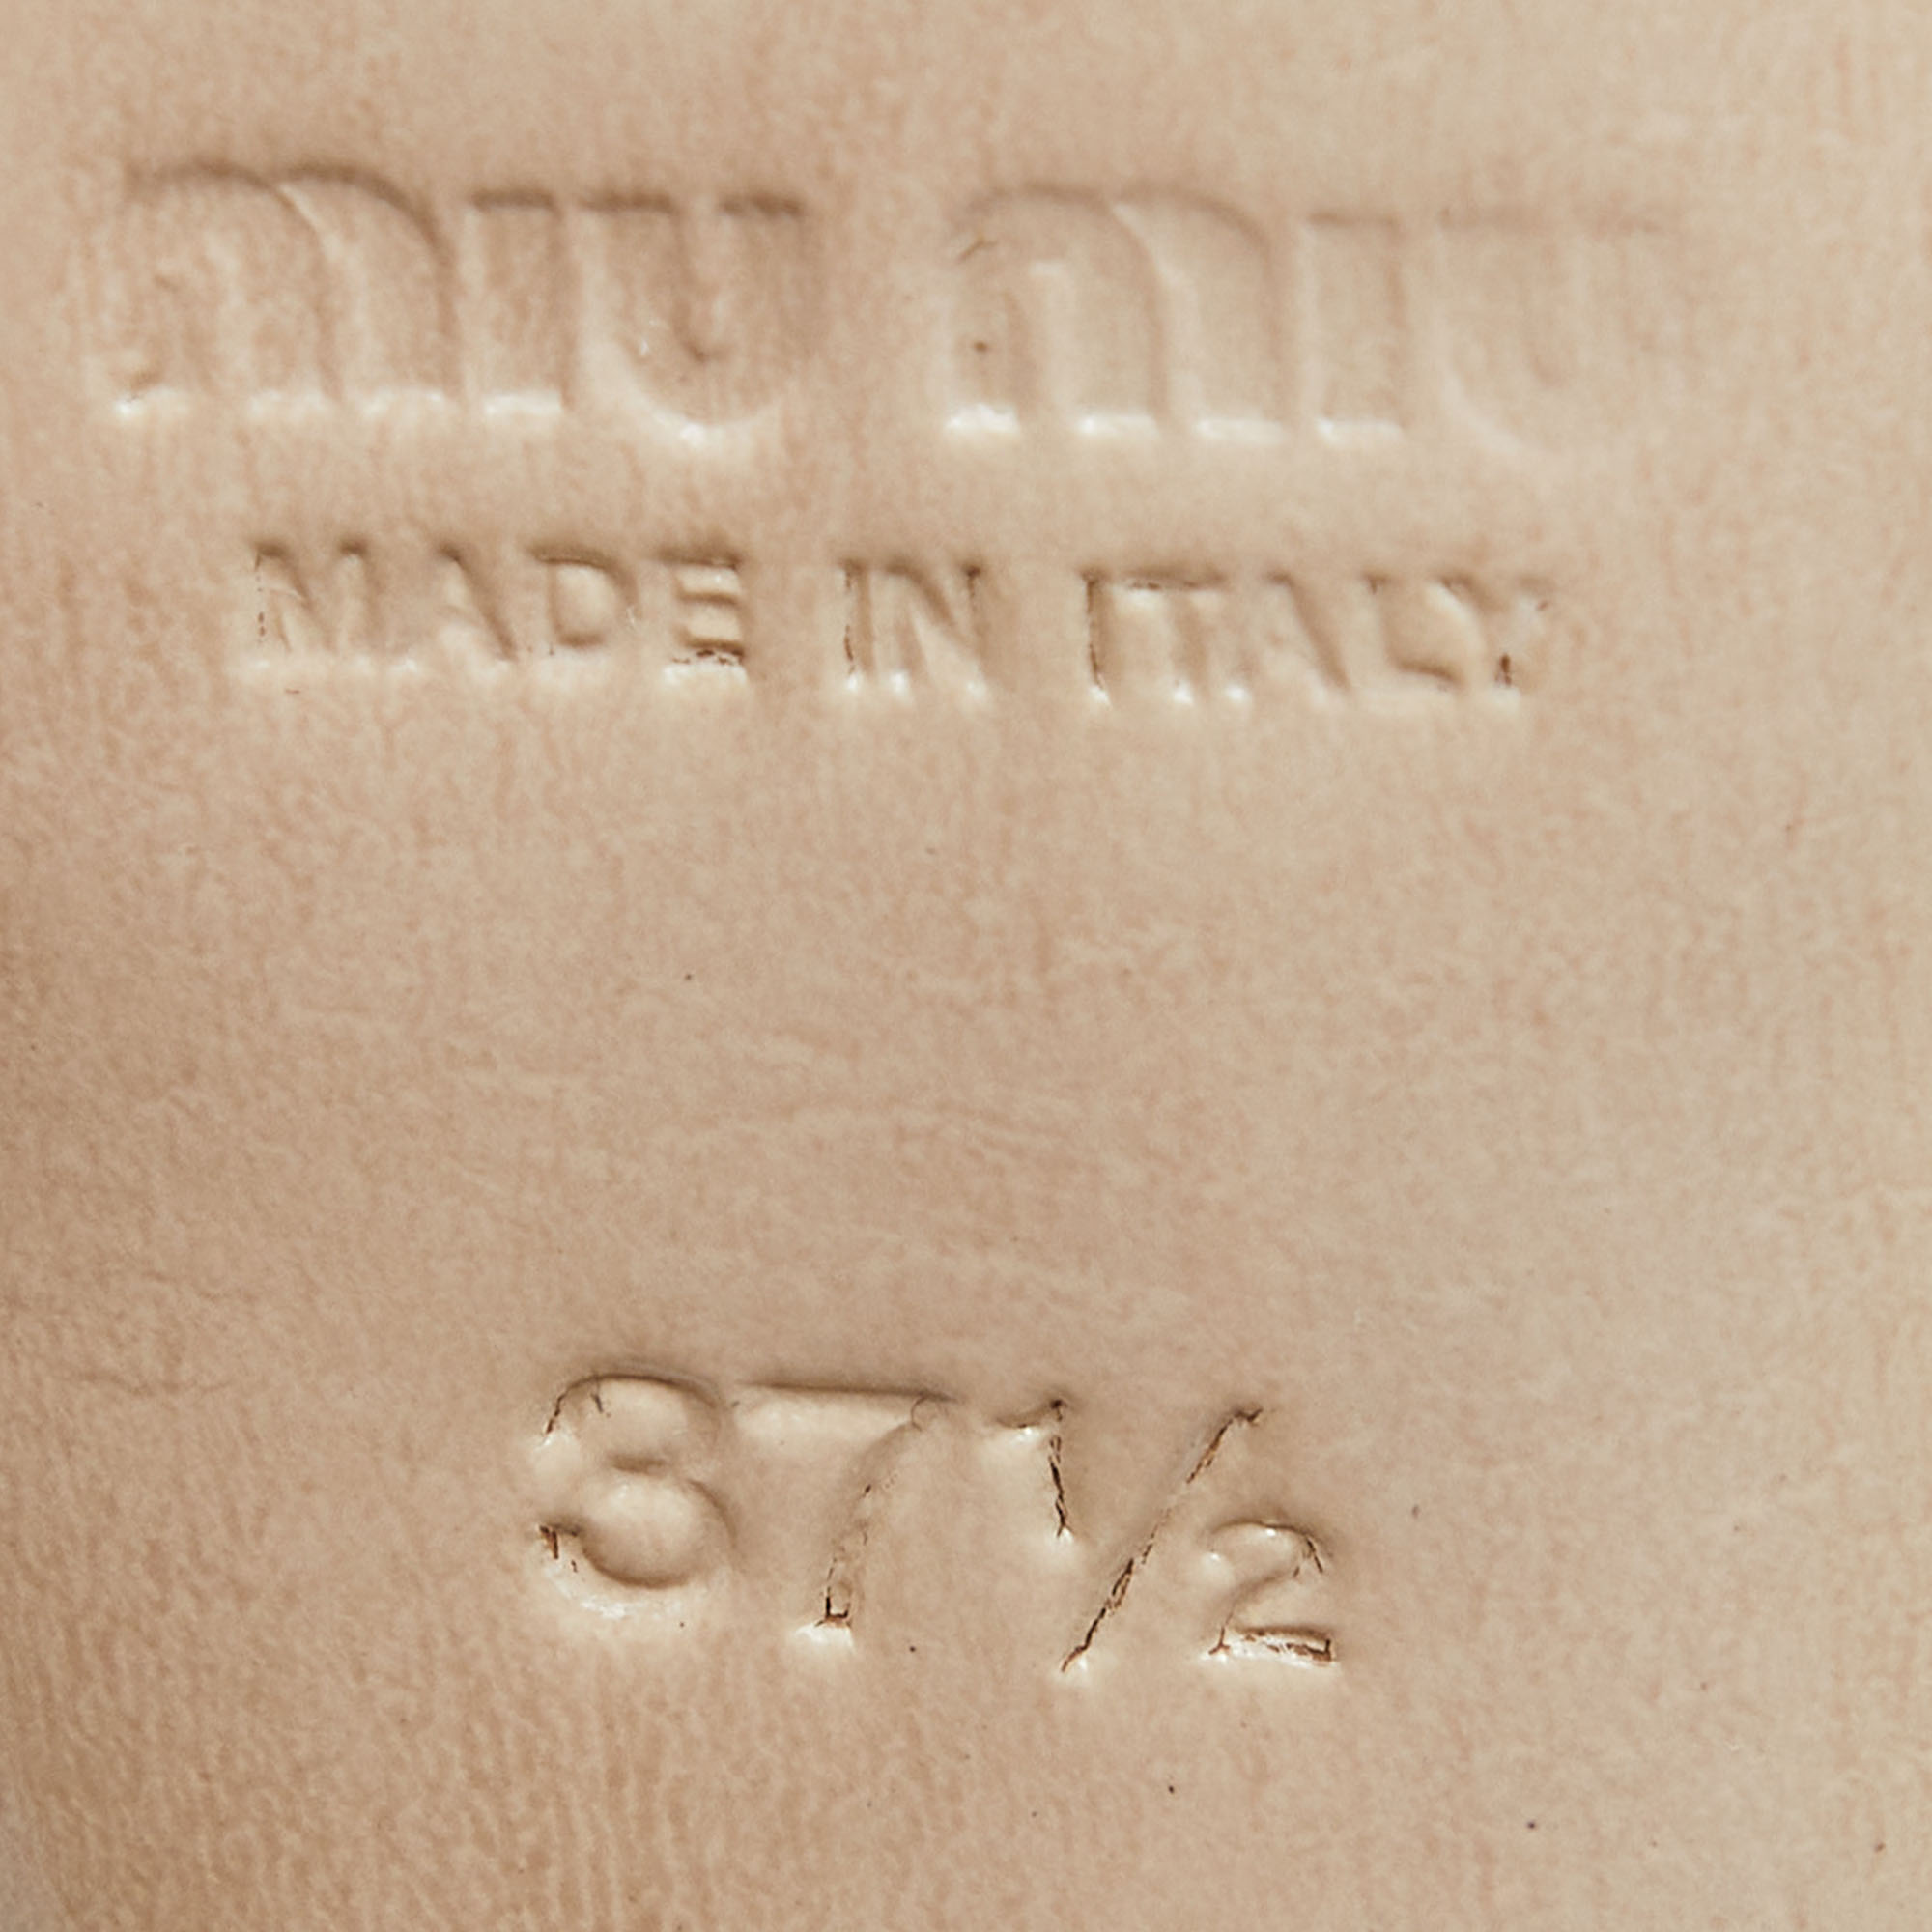 Miu Miu Pink Patent Leather Crystal Embellished Heel Platform Sandals Size 37.5